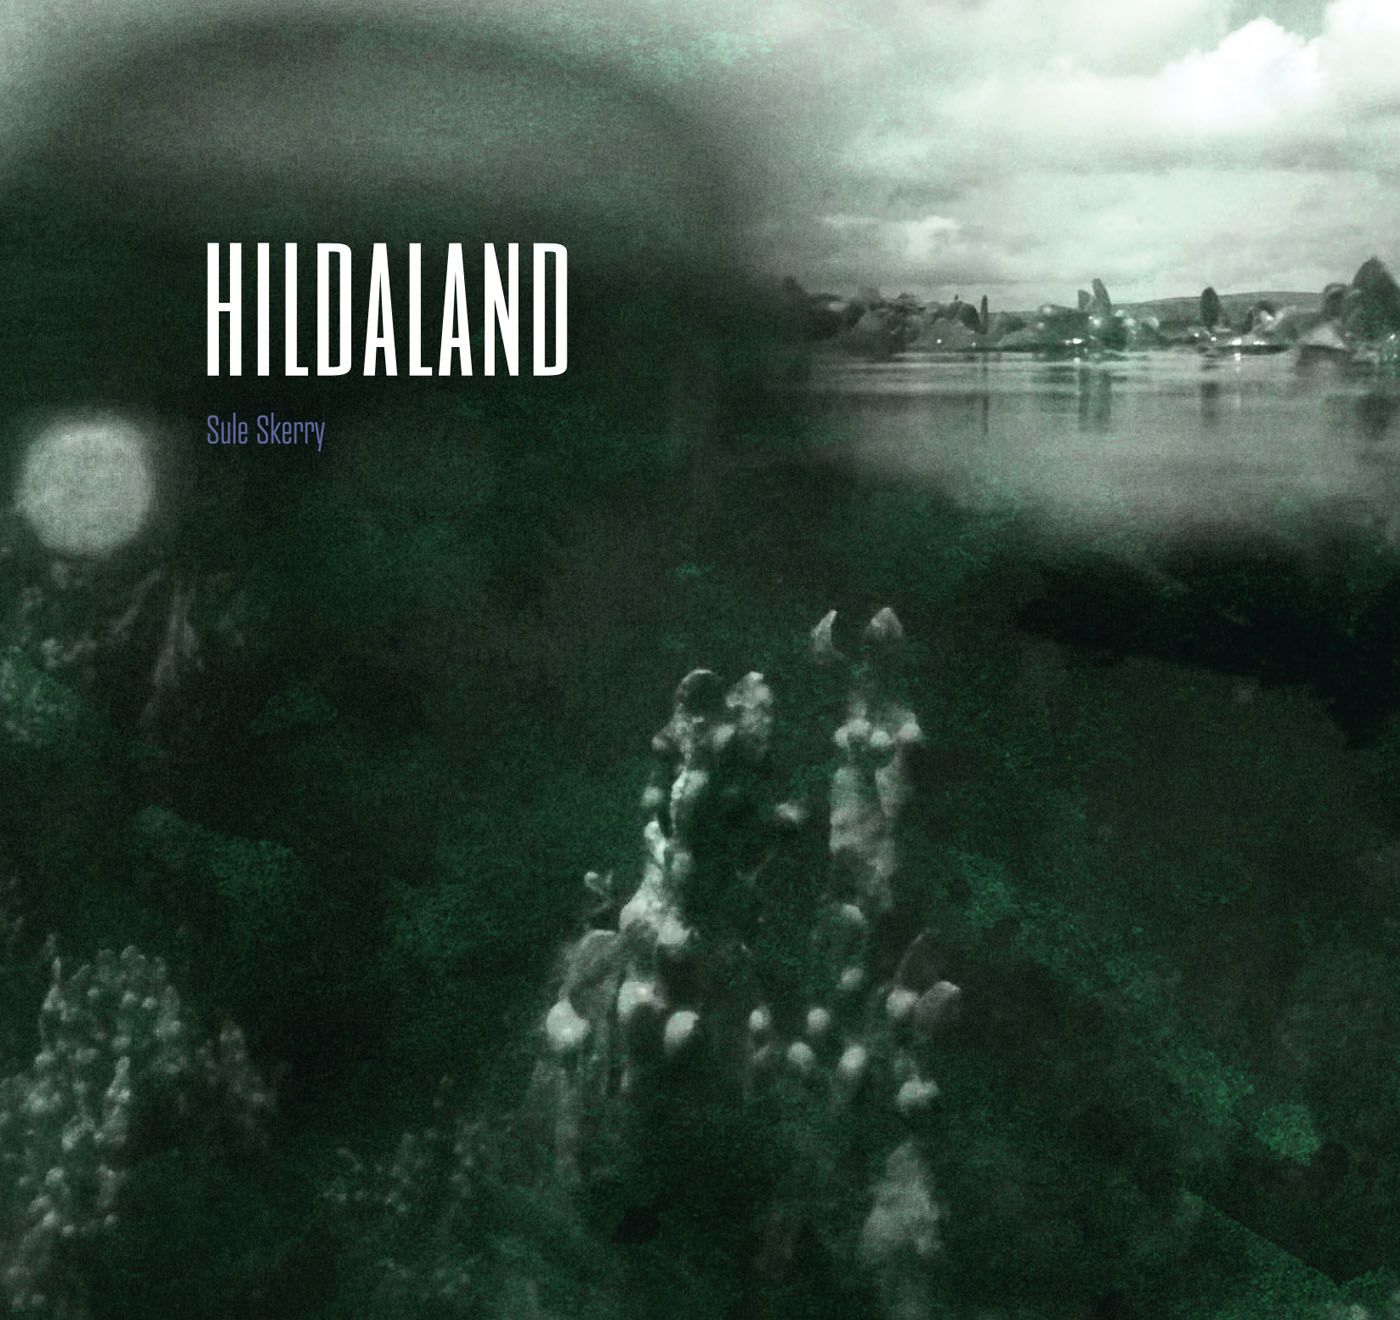 Hildaland